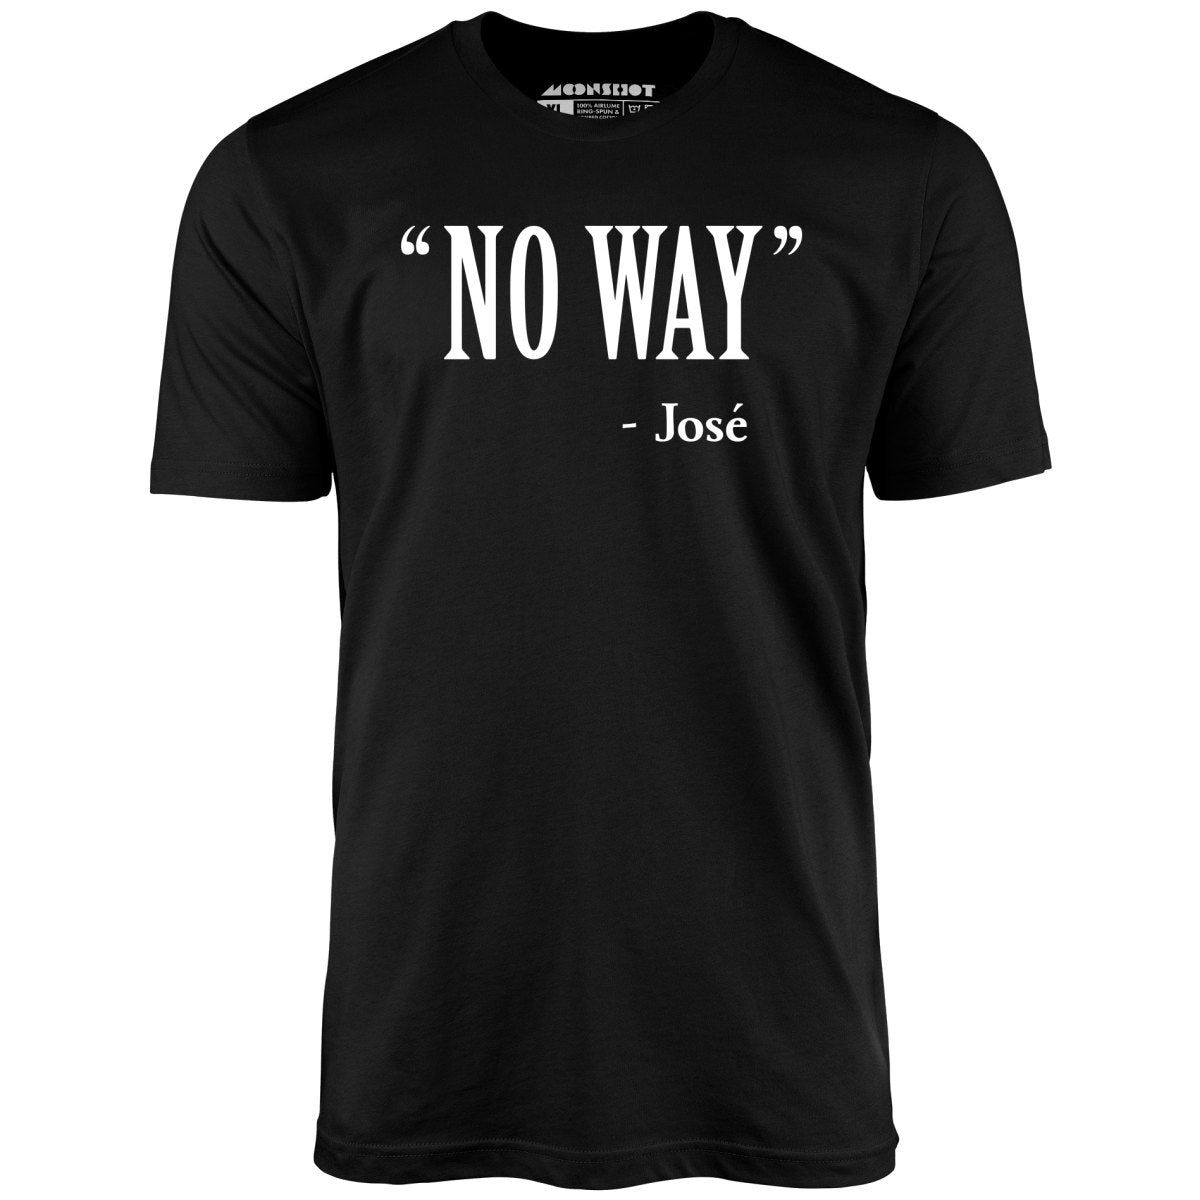 No Way Jose - Unisex T-Shirt